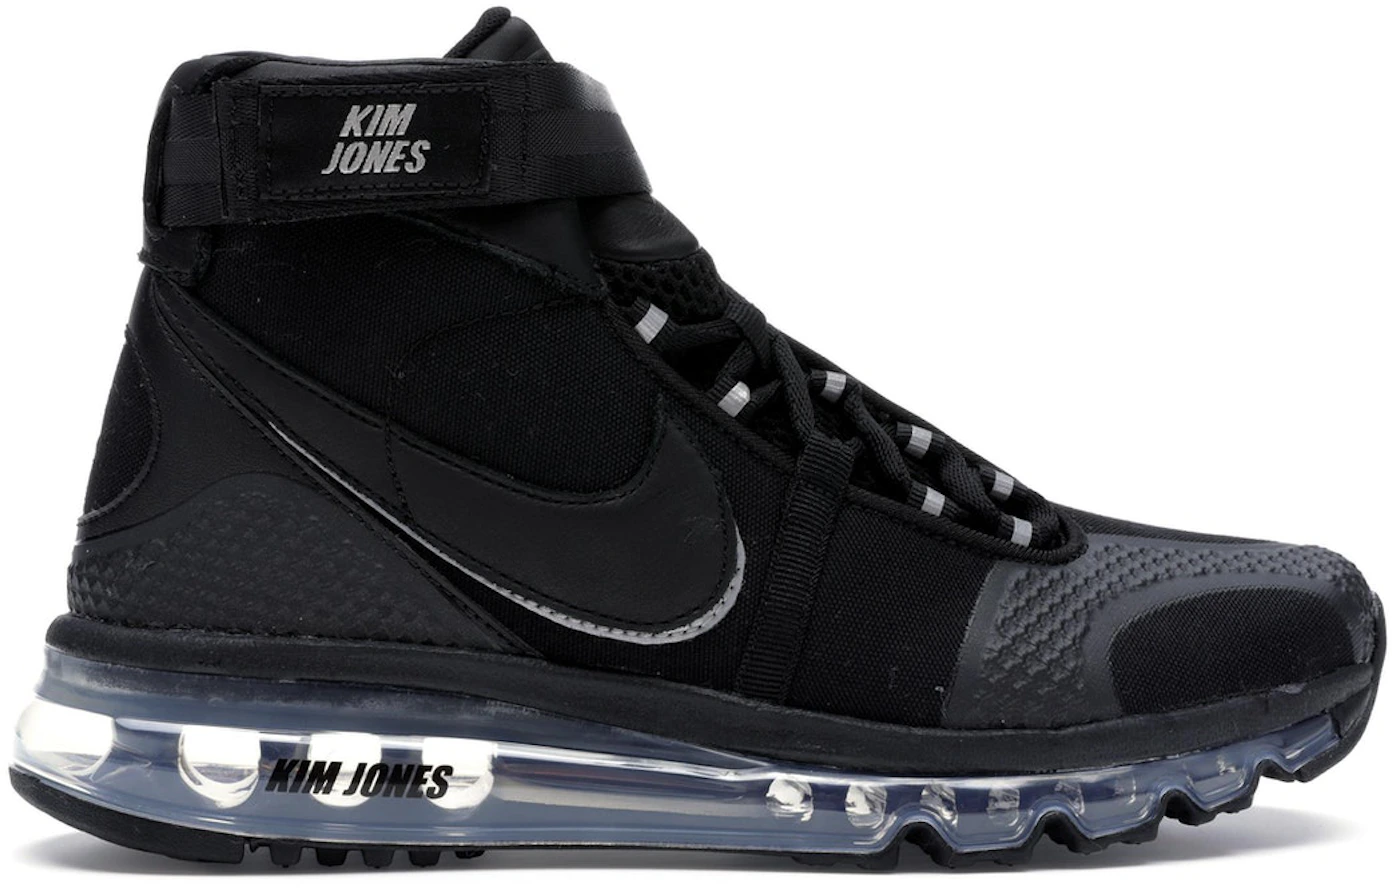 Kim Jones x Nike Air Max 360 High Black AO2313-001 